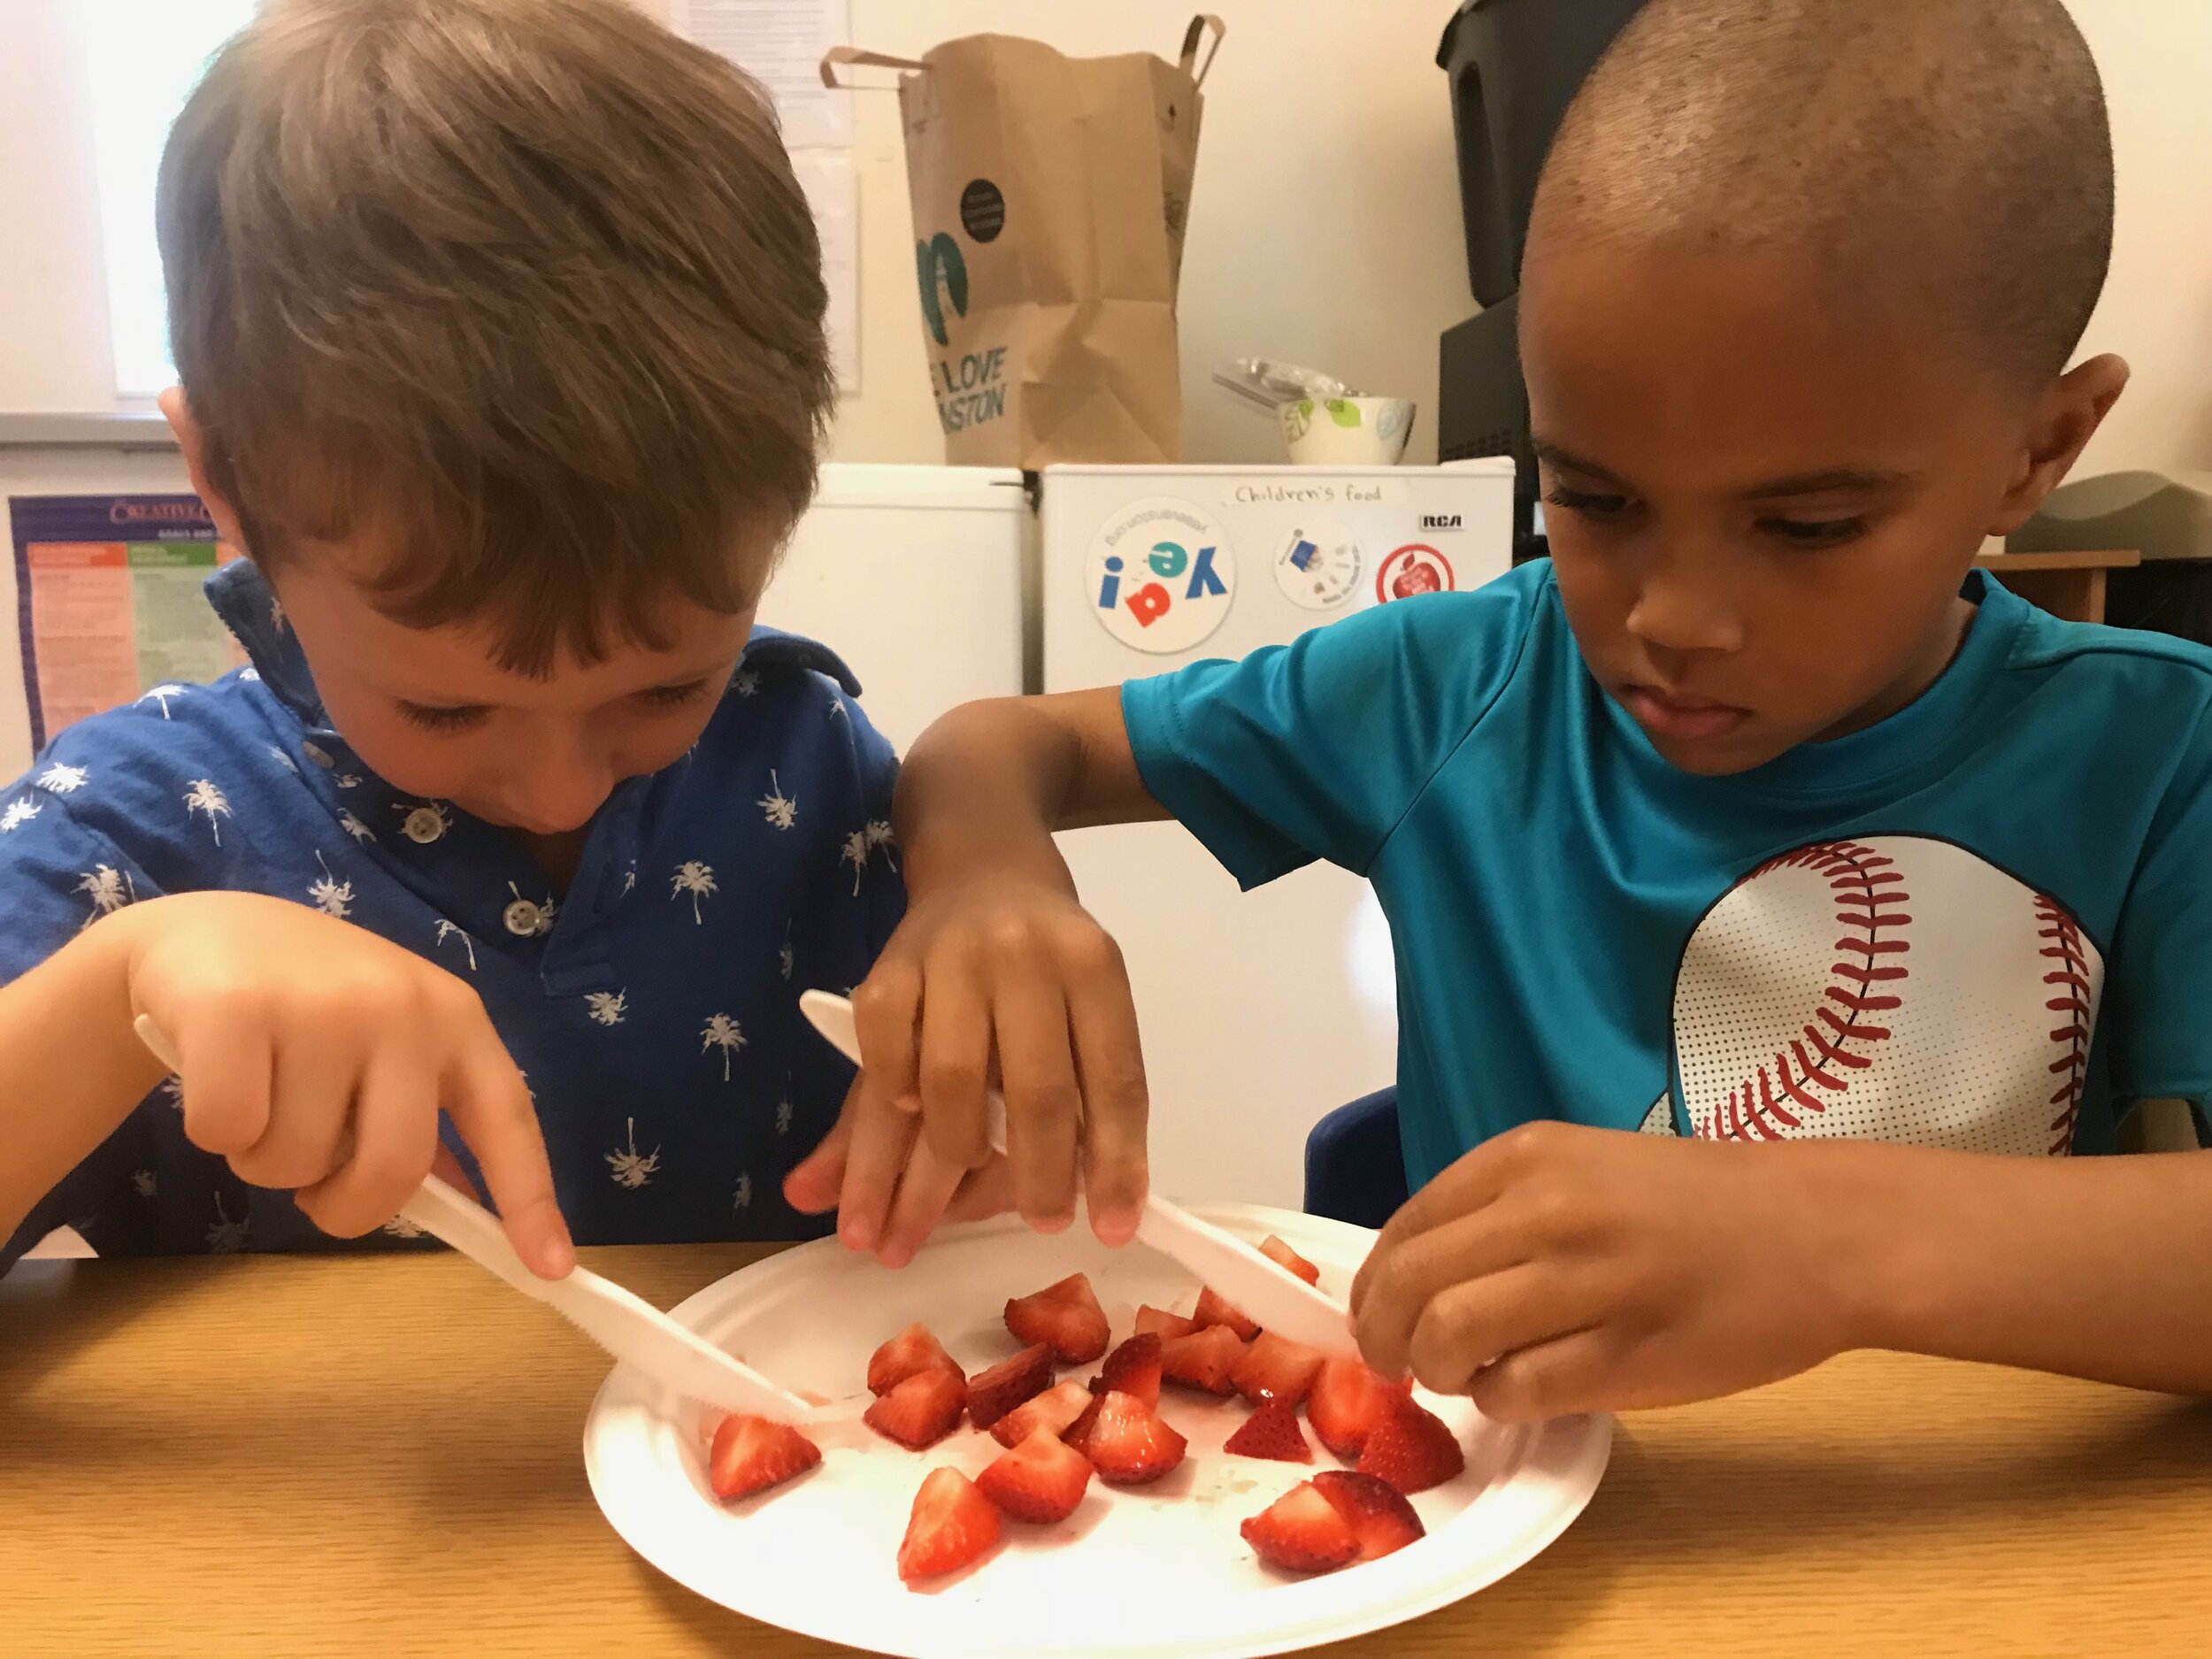 Friends cutting strawberries1.JPG